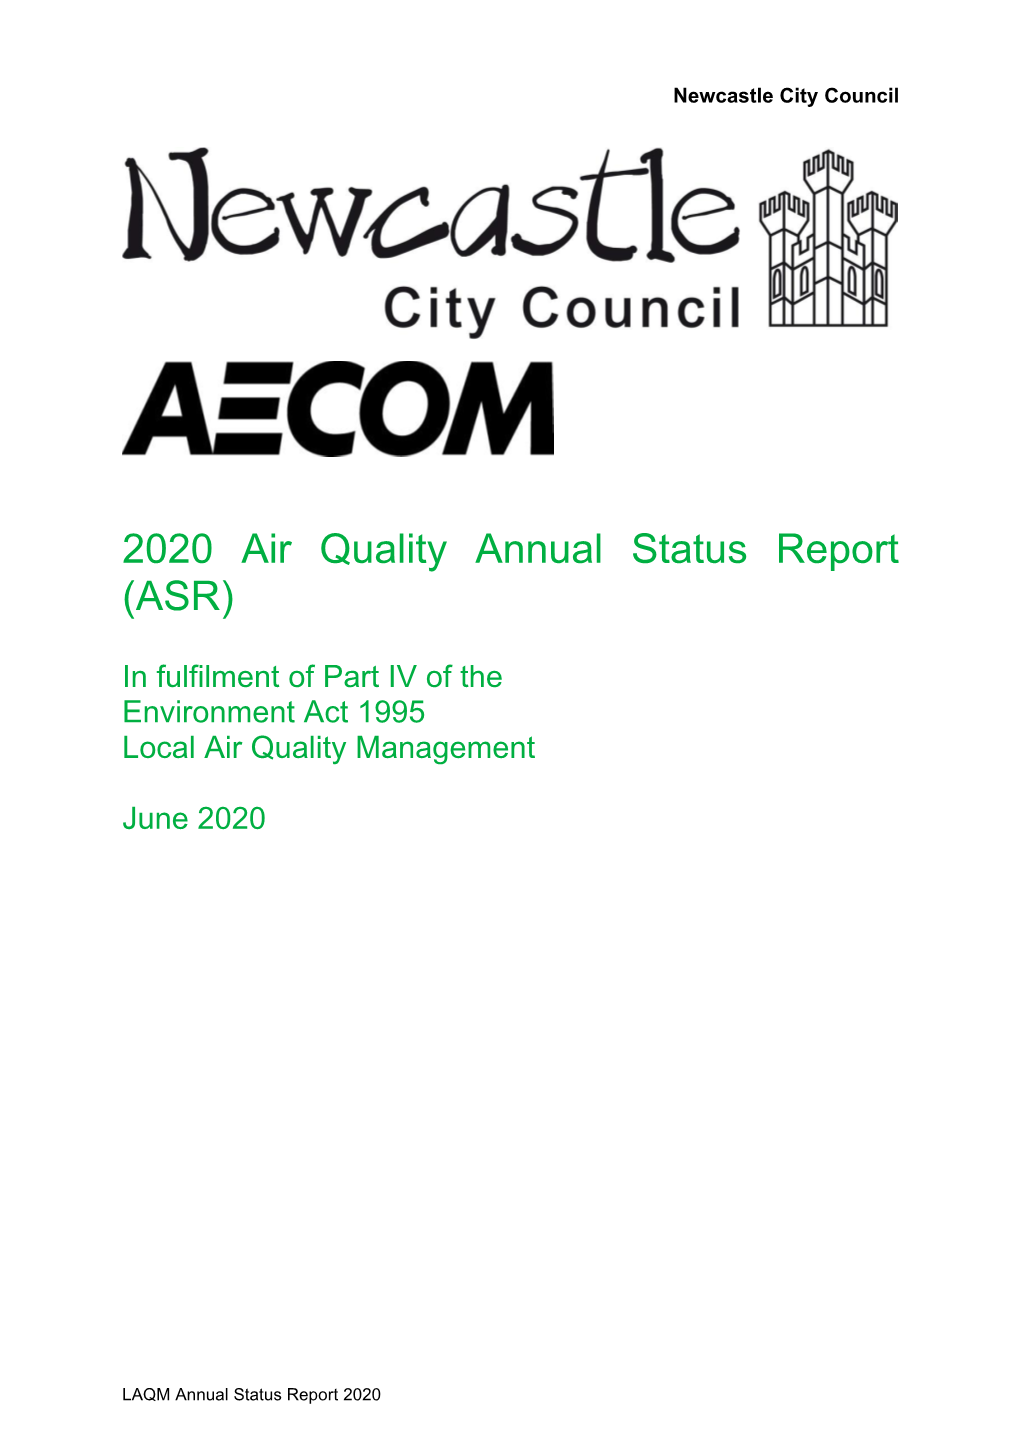 Air Quality Annual Status Report 2020